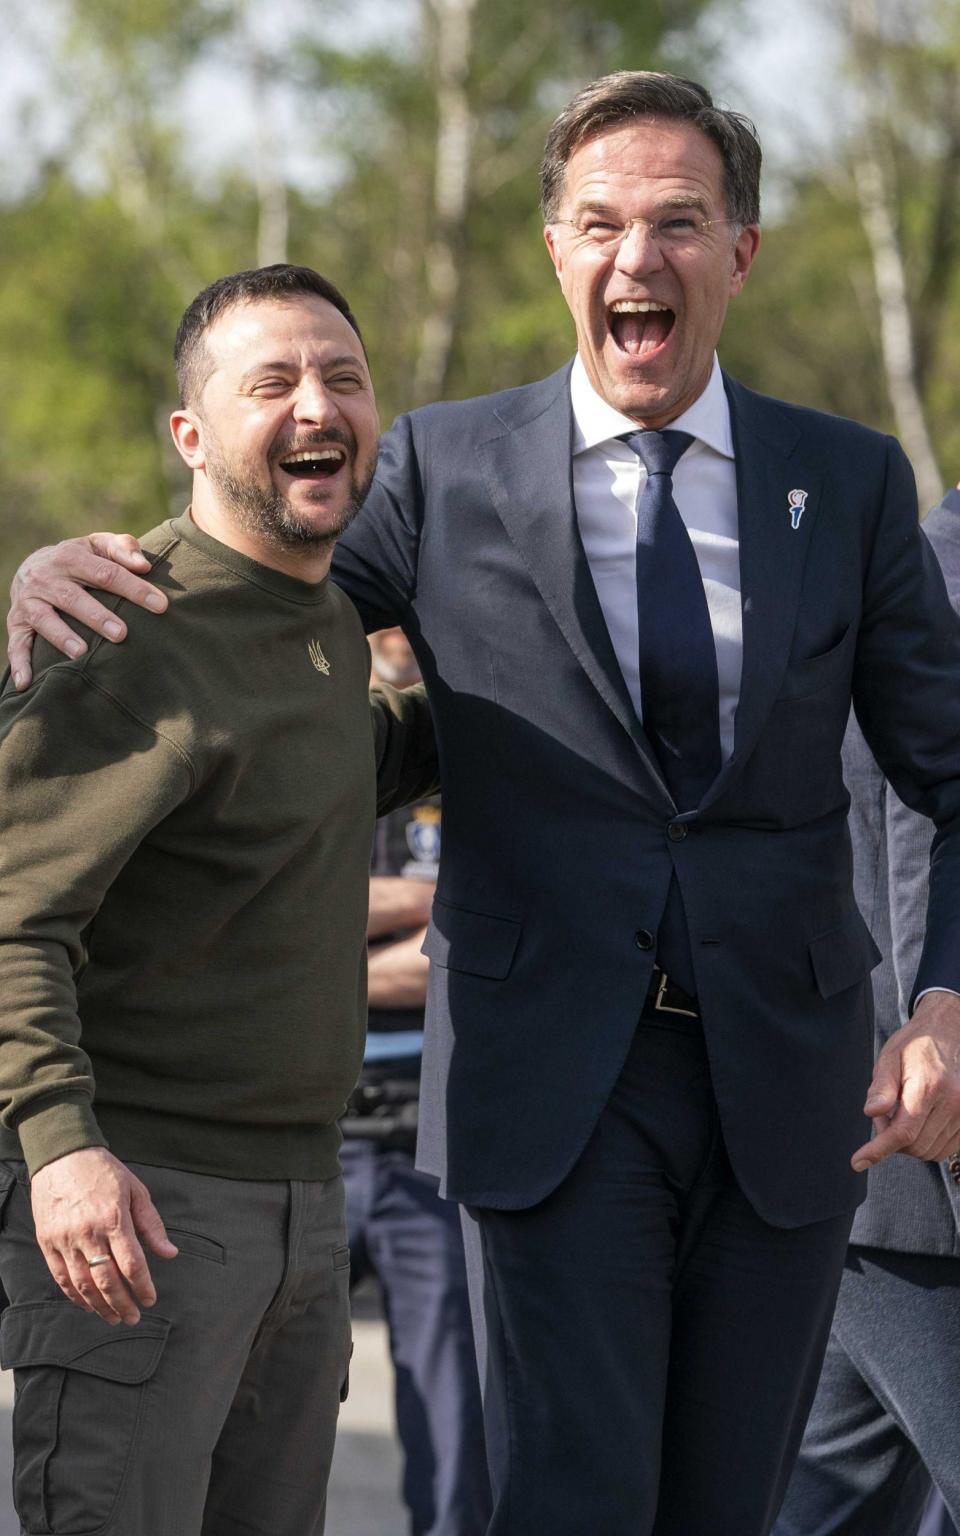 Ukrainian President Volodymyr Zelensky (L) and Dutch Prime Minister Mark Rutte (R) share a laugh as they visit the military base Camp Soesterberg, Netherlands, 04 May 2023 - JEROEN JUMELET/EPA-EFE/Shutterstock/Shutterstock